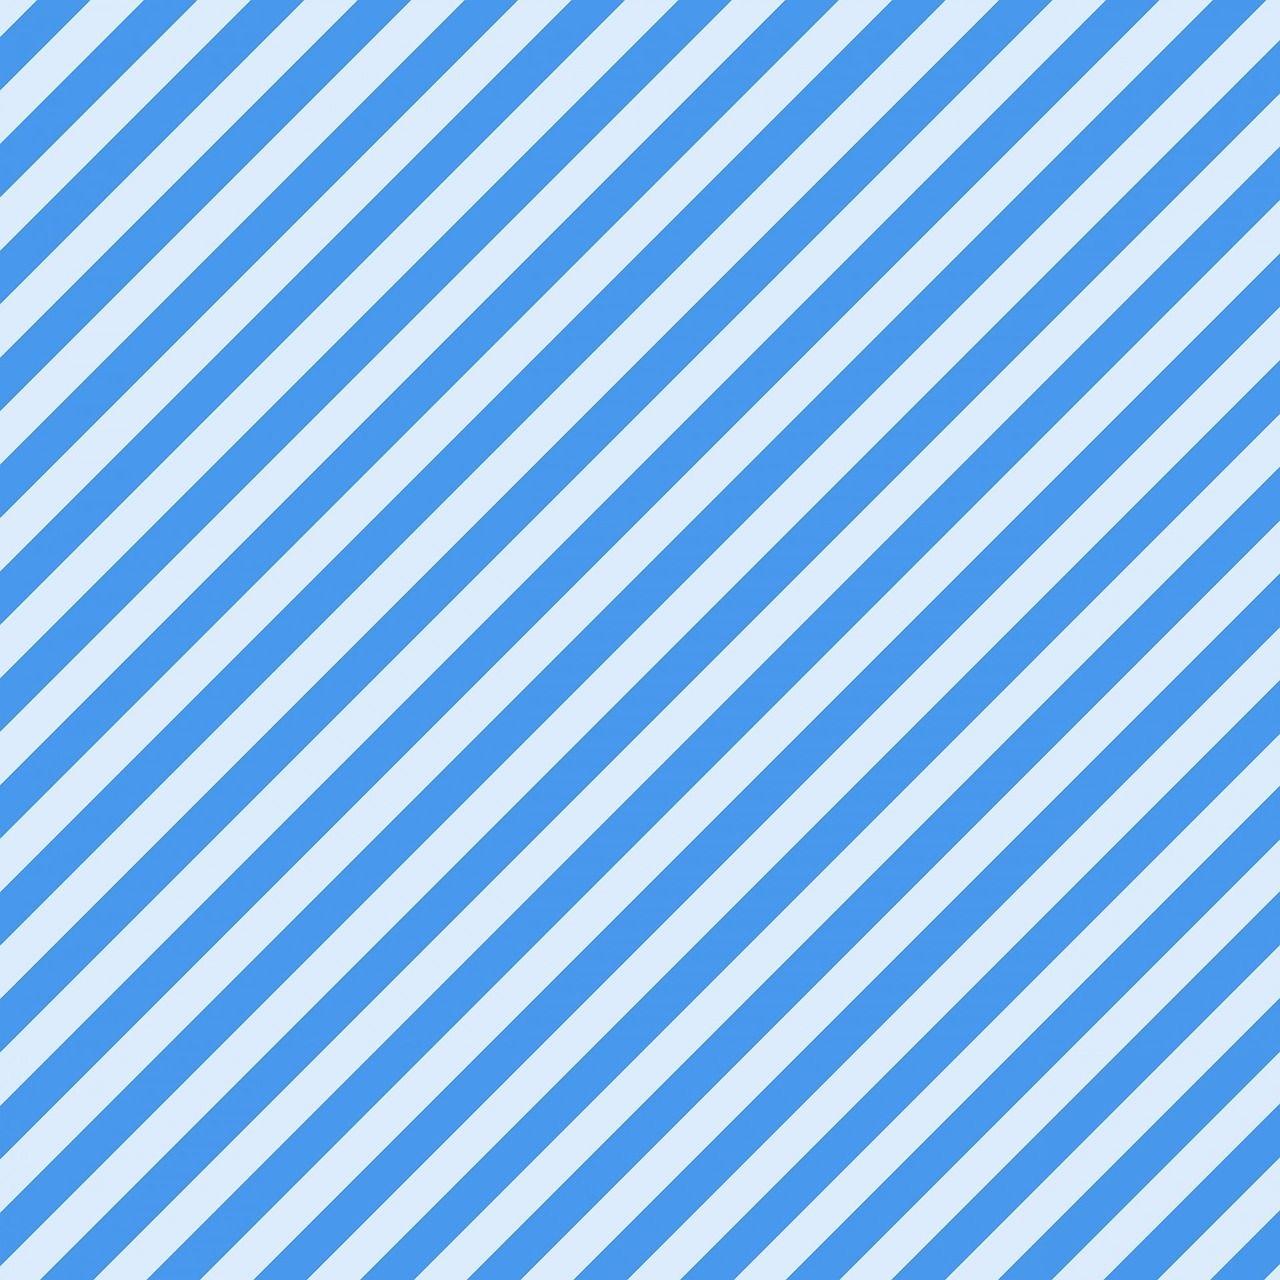 Free Image Striped Diagonal Blue. Striped background Blue stripes Cool wallpaper